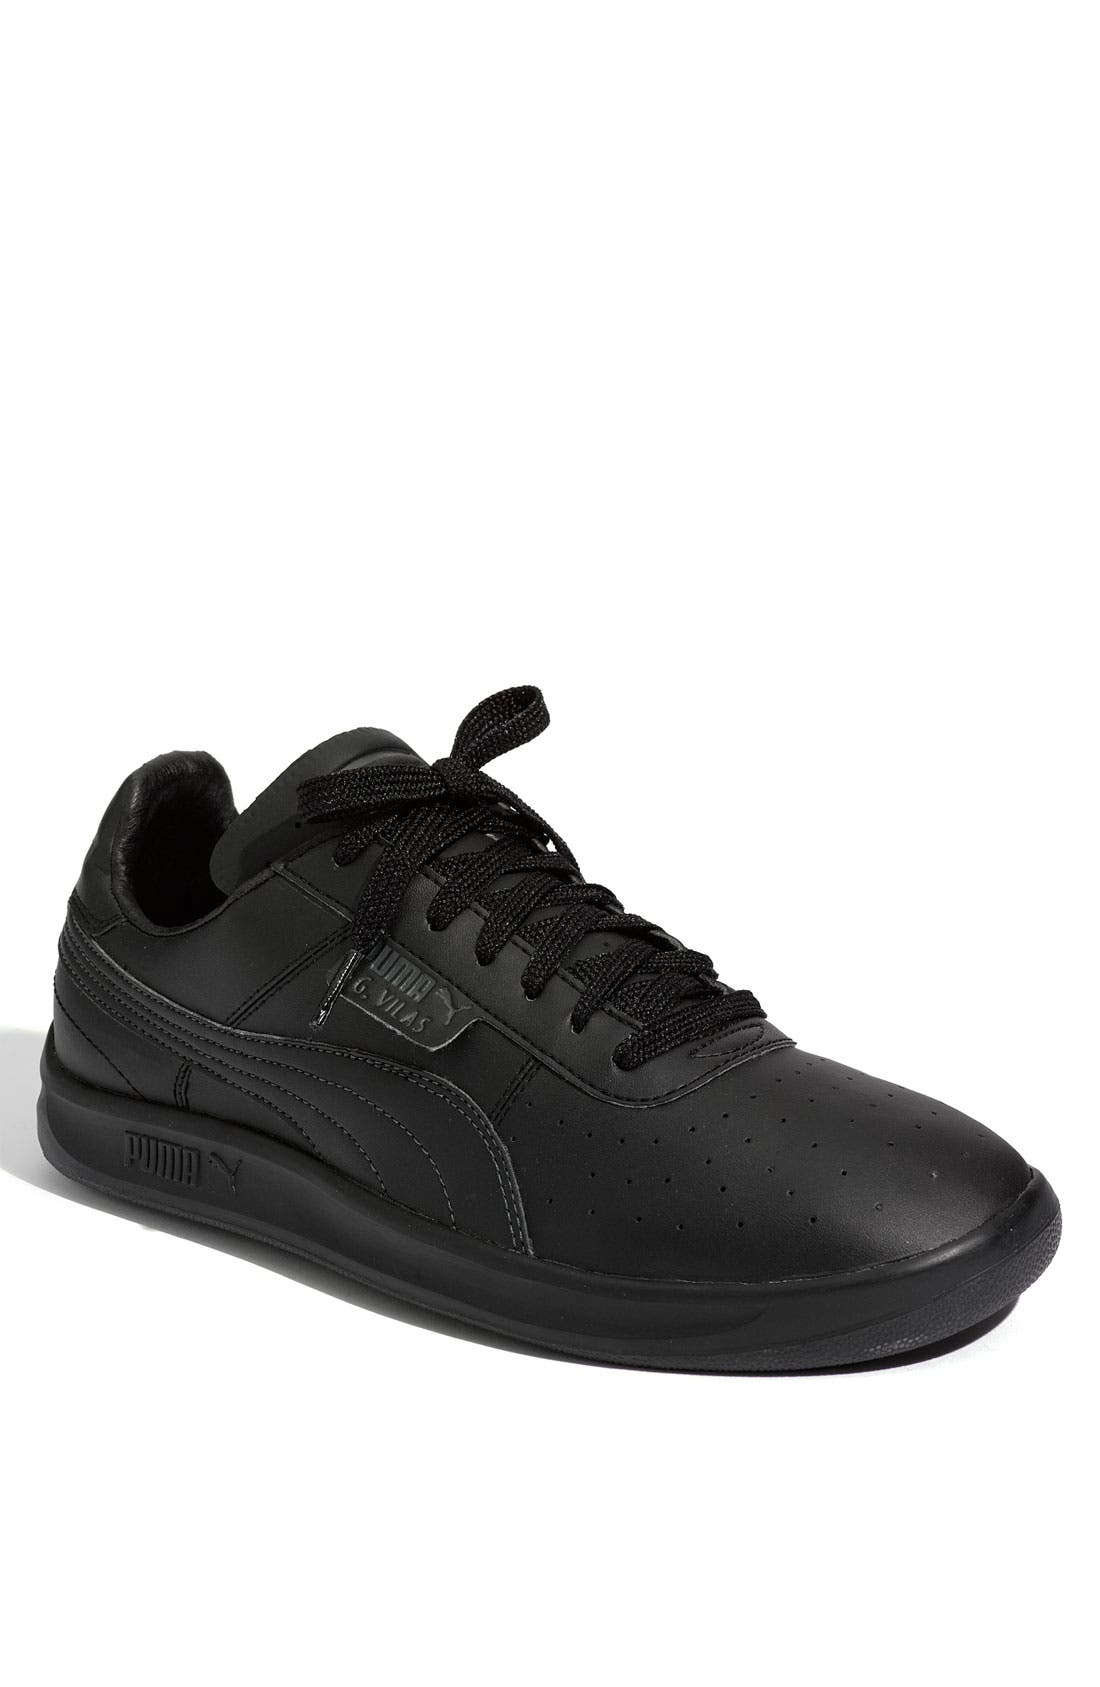 puma men's g. vilas l2 leather classic sneaker